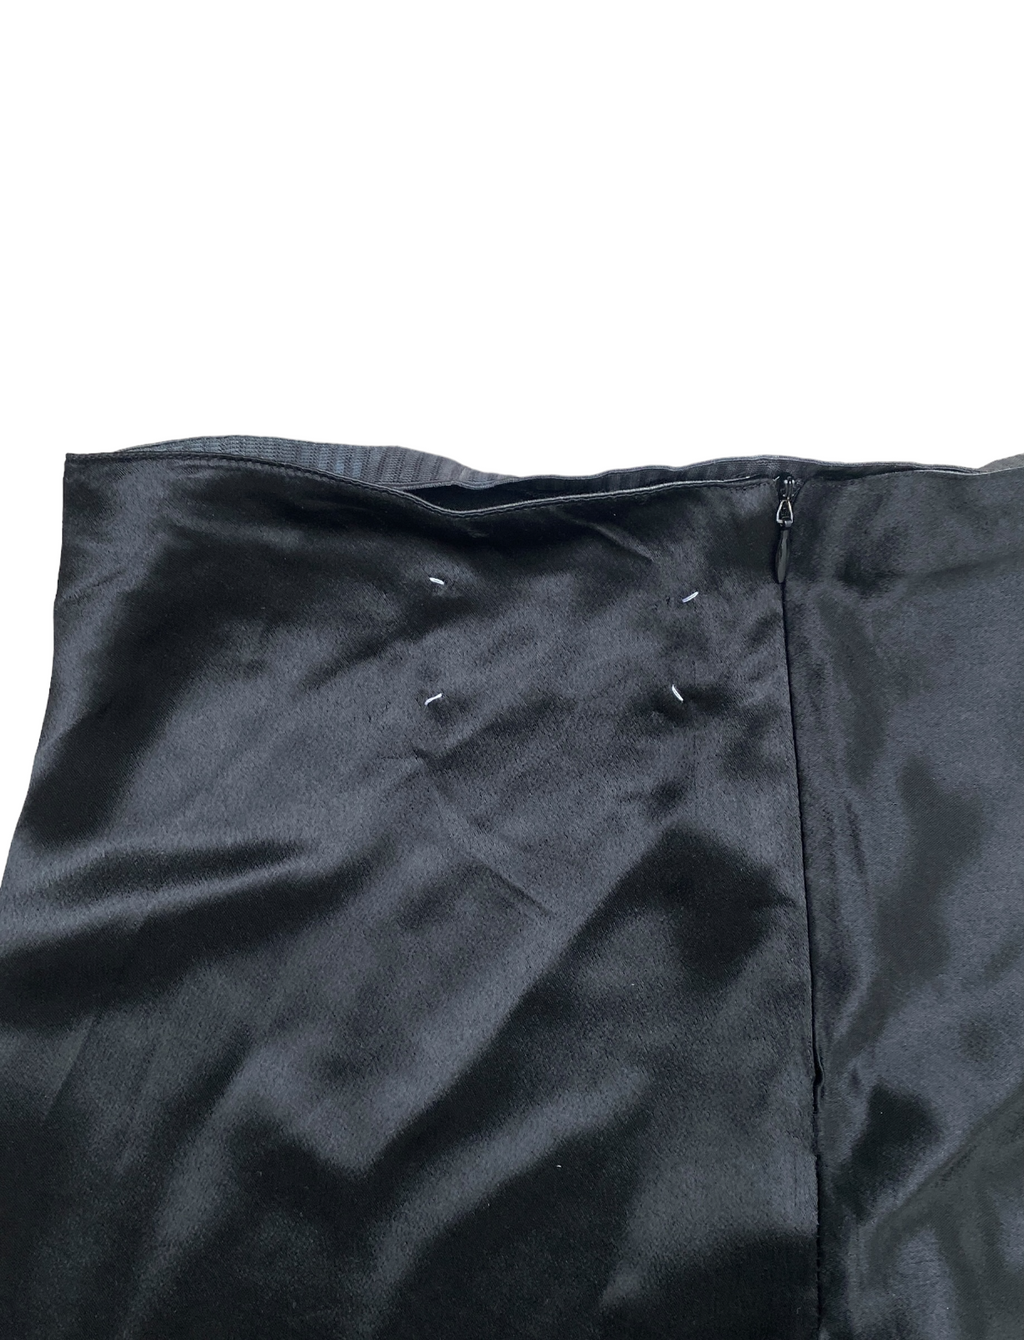 Early 1990’s Vintage Skirt Black Viscose / Reverse Lining midi